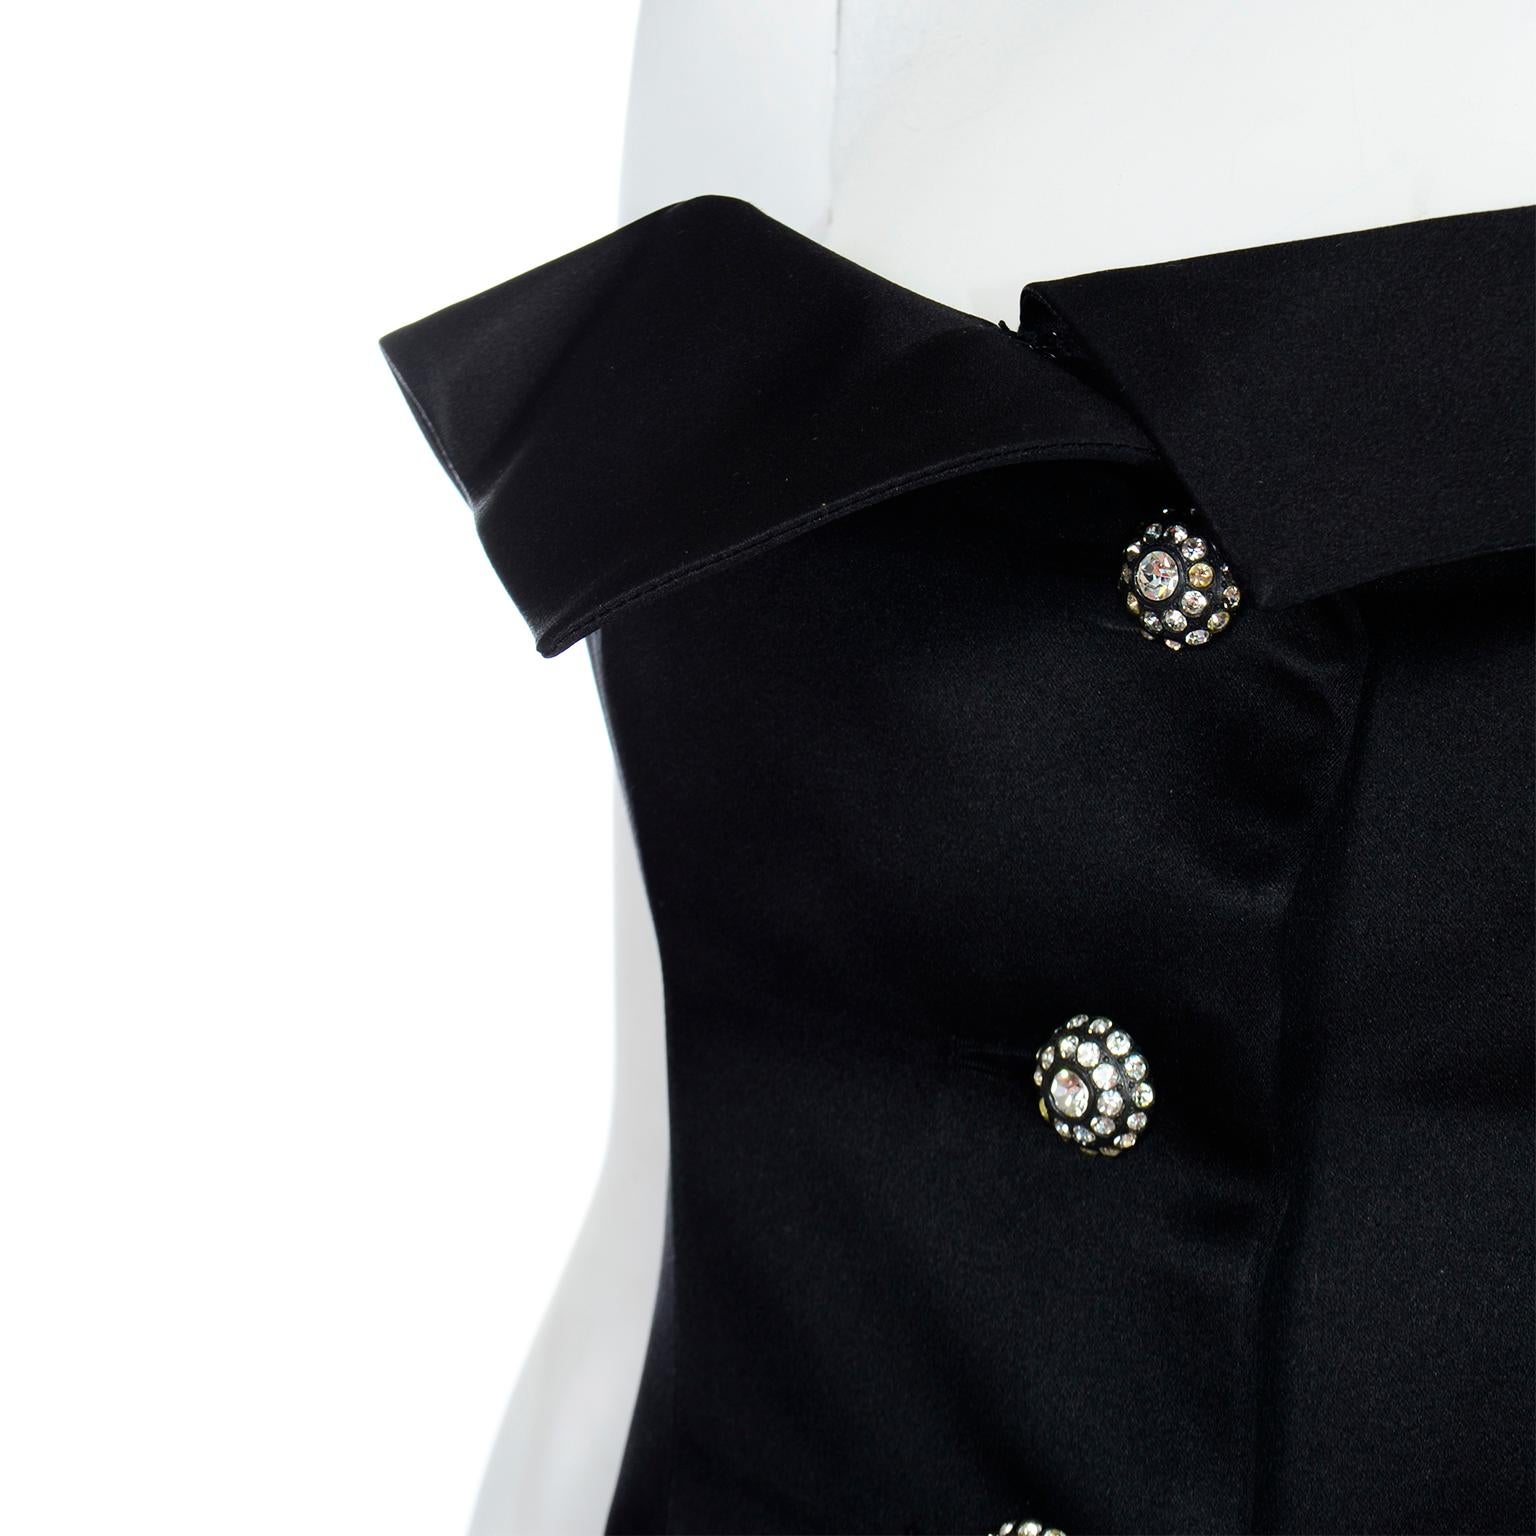 Yves Saint Laurent 1985 Vintage Black Strapless Runway Evening Gown For Sale 5